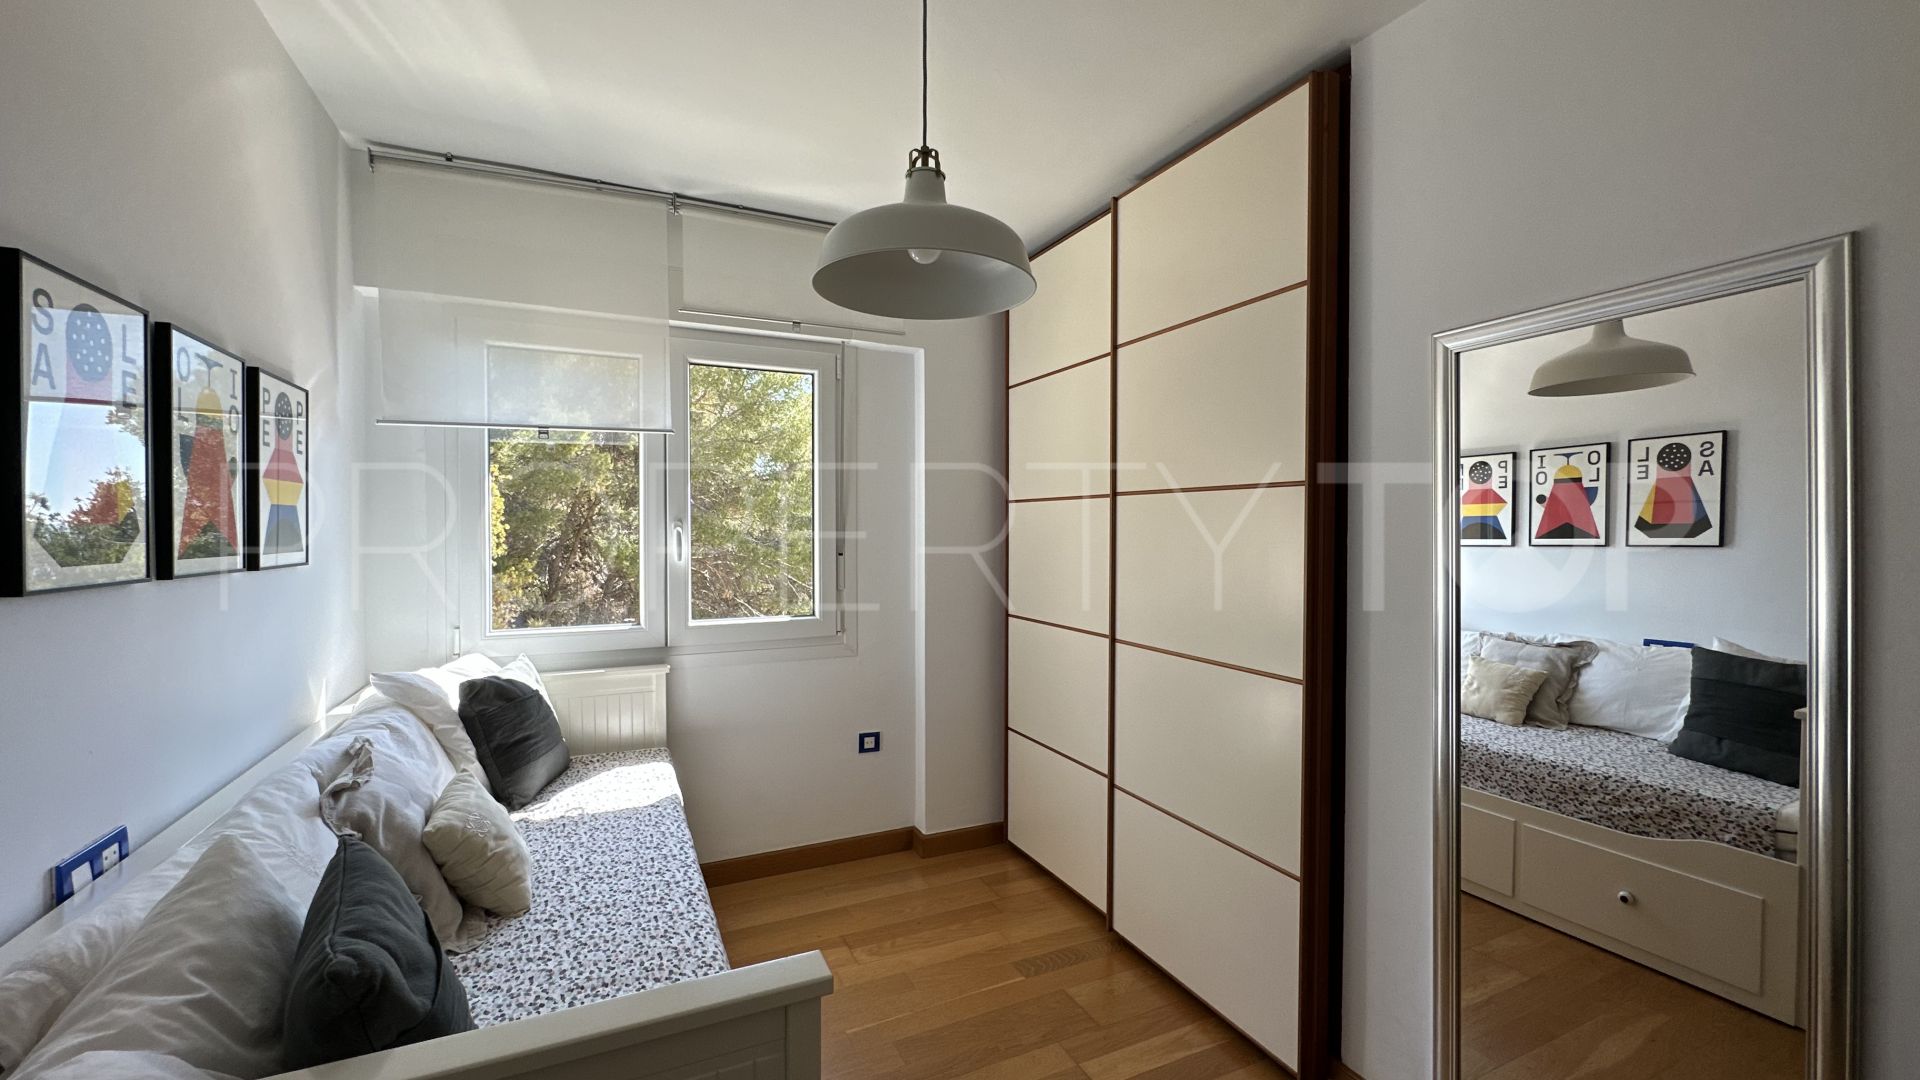 Comprar piso en Malaga - Este con 3 dormitorios